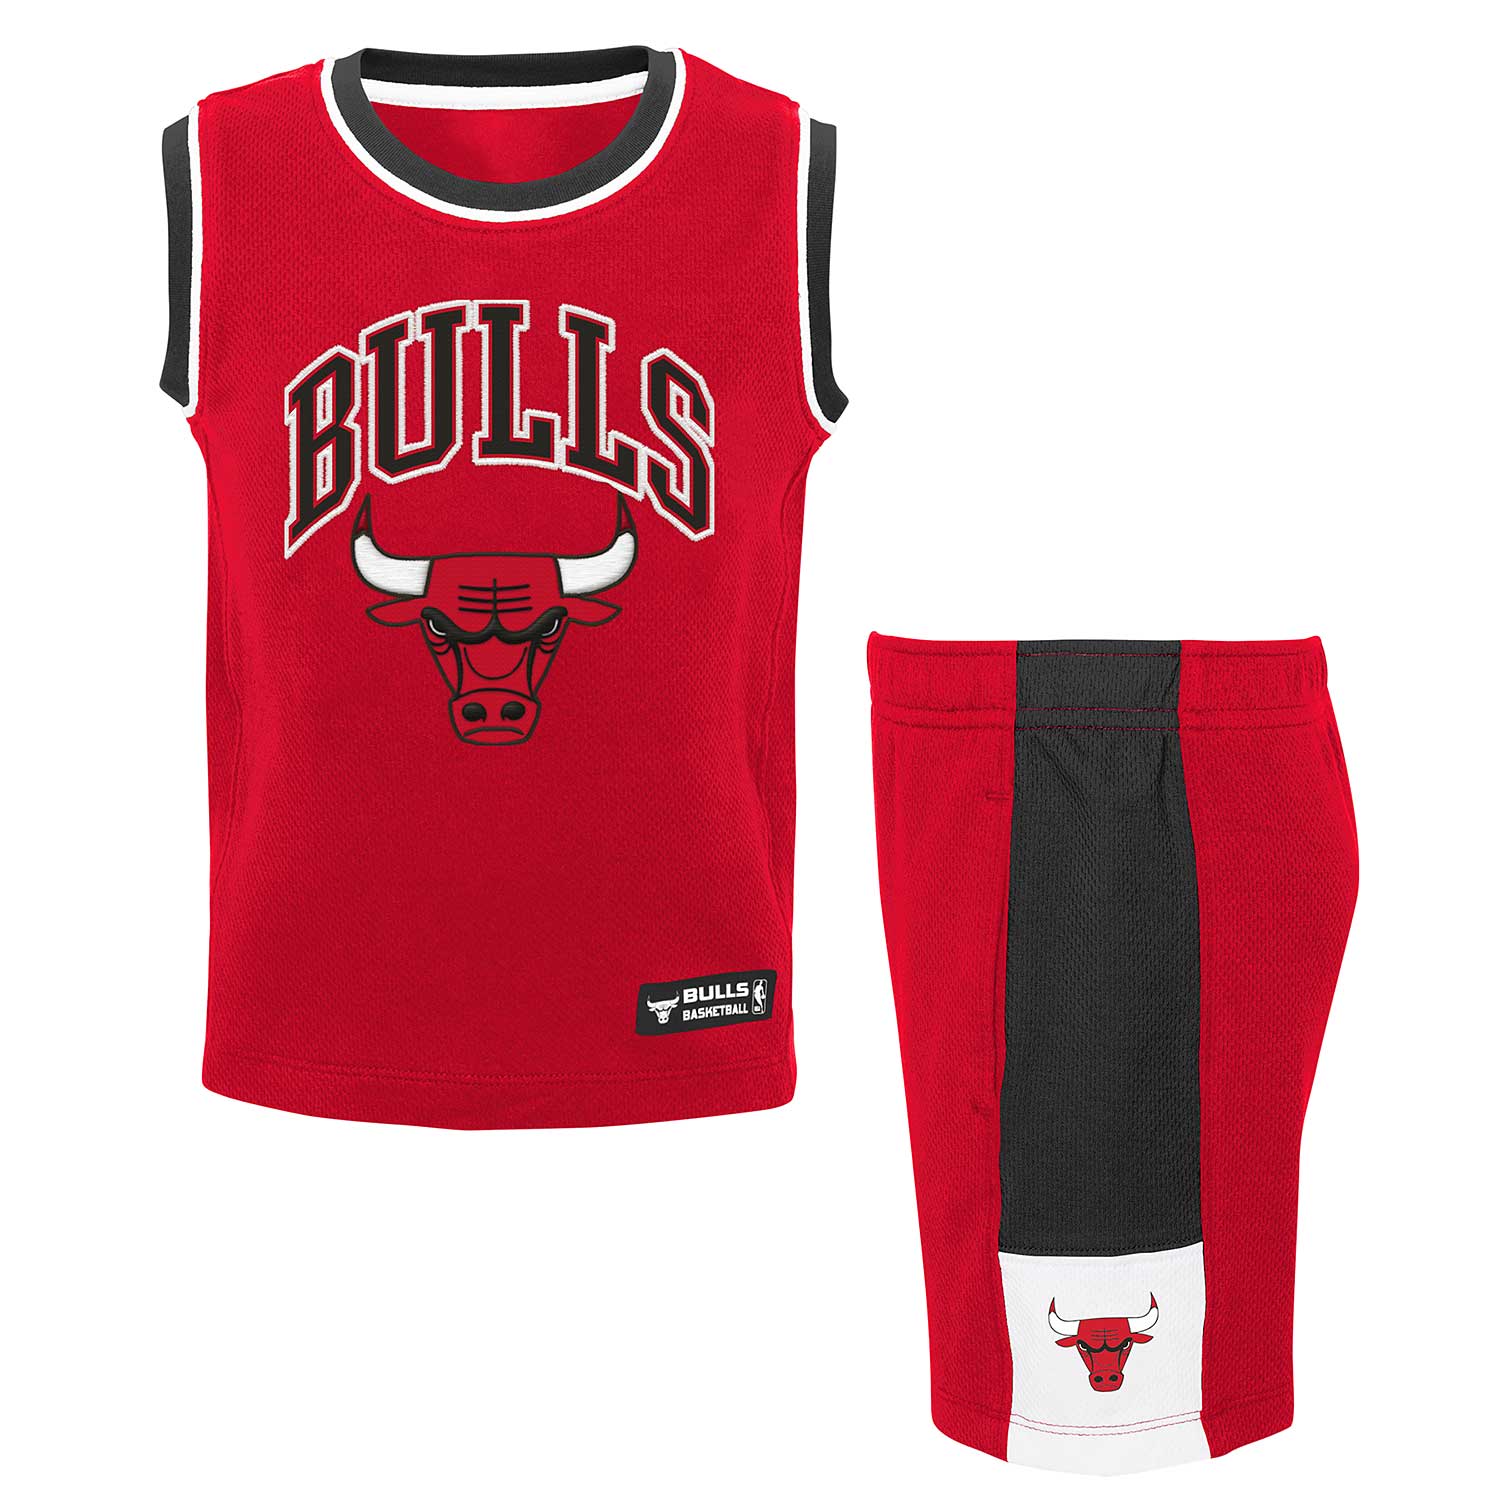 Chicago Bulls Latest Basketball Jersey